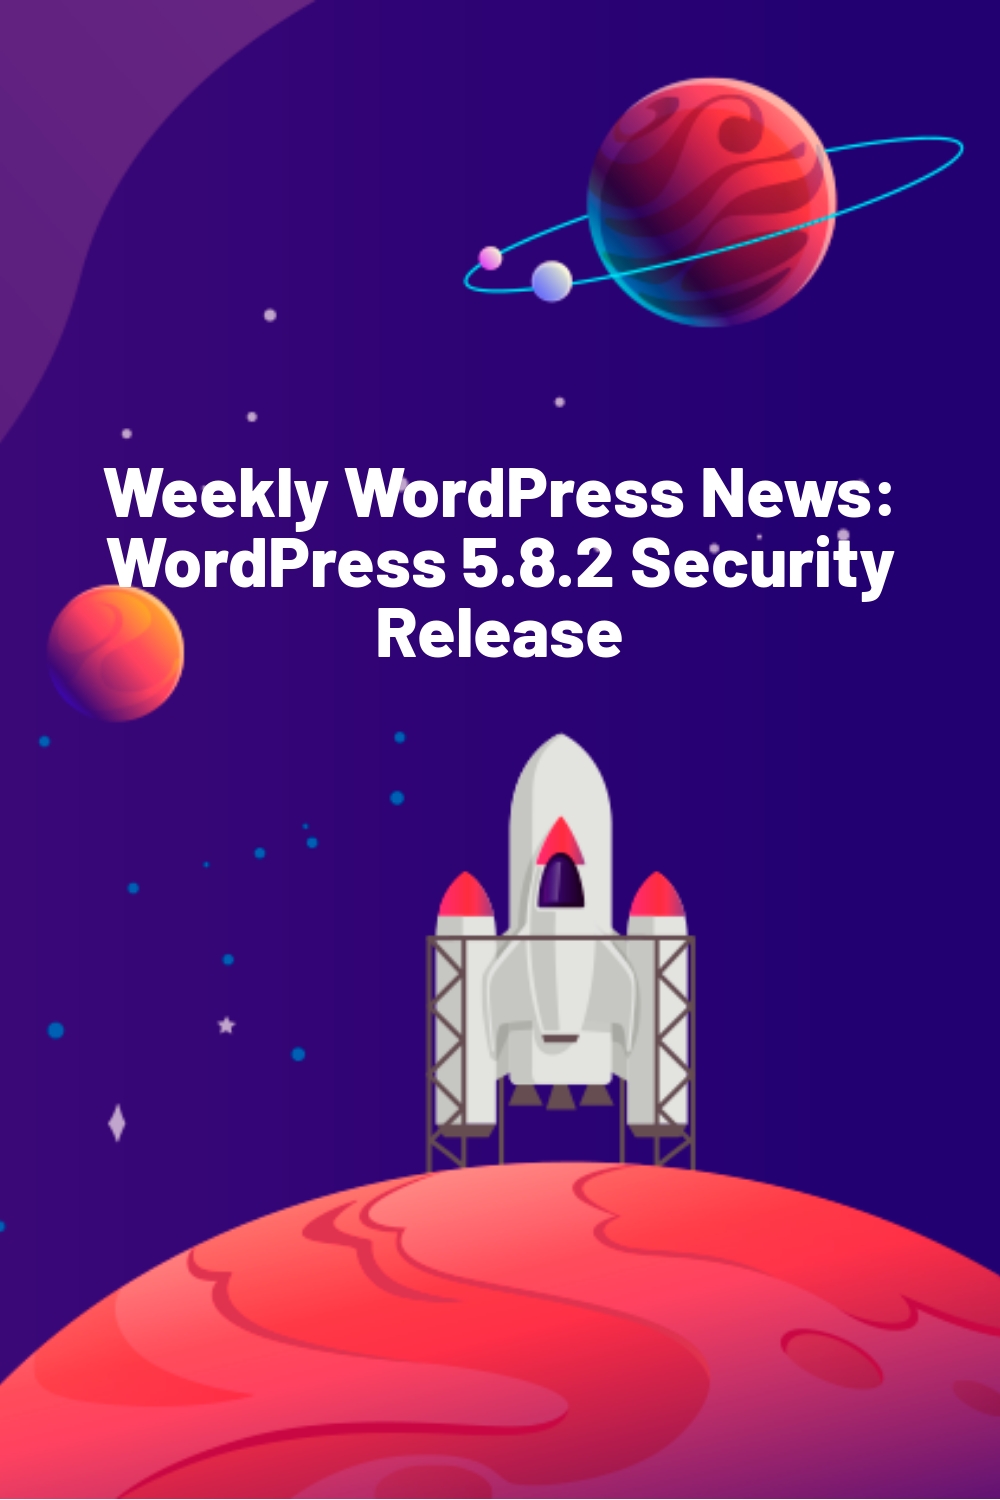 Weekly WordPress News: WordPress 5.8.2 Security Release